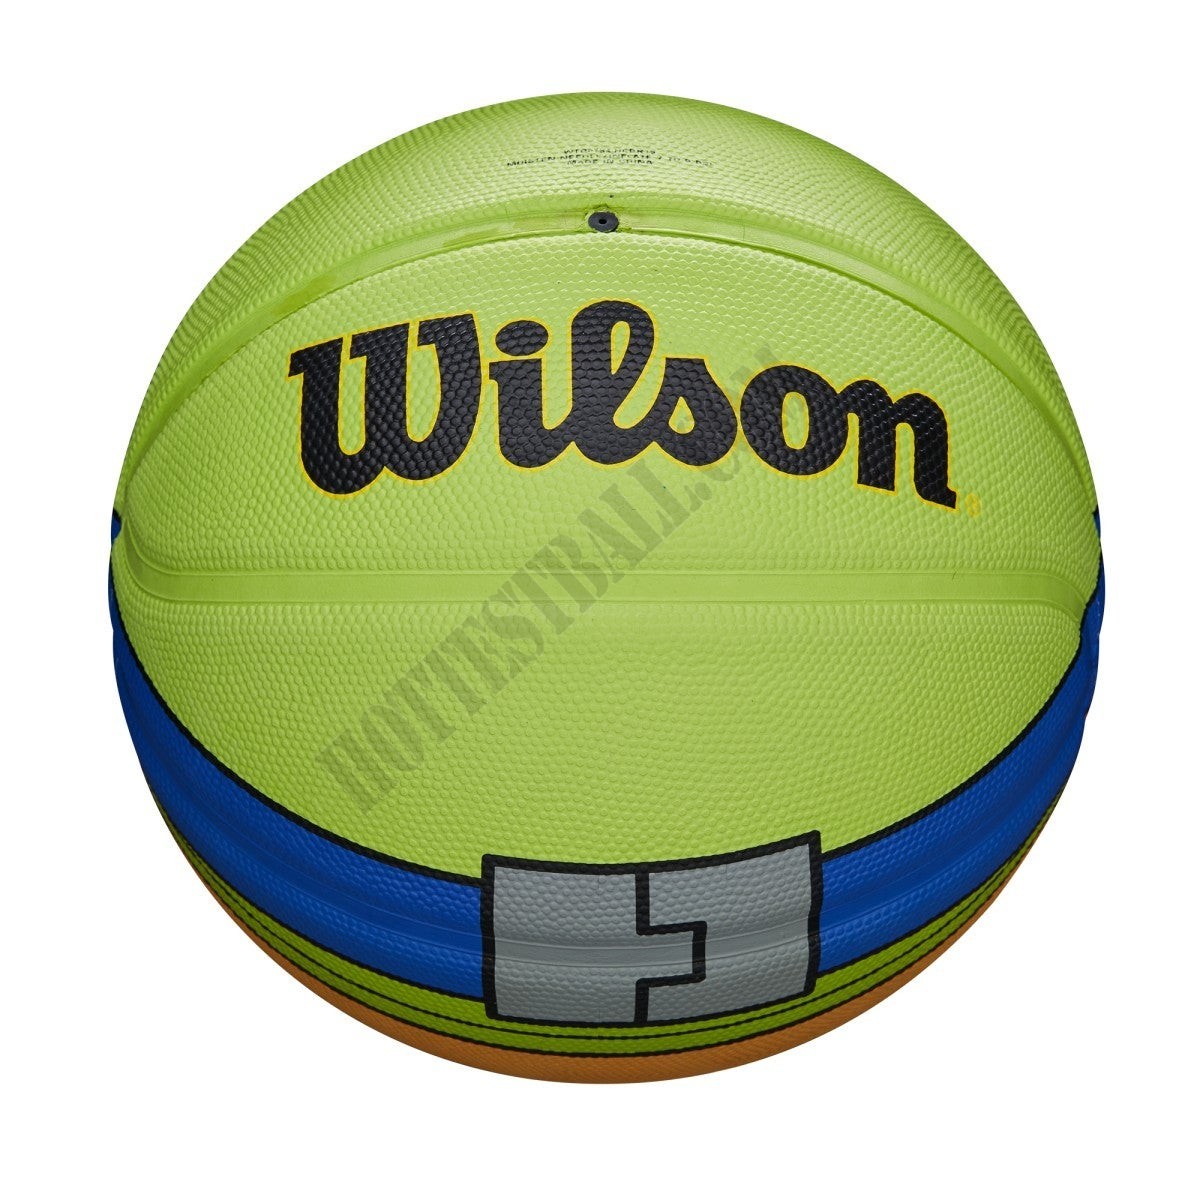 Hebru Brantley Flyboy Limited Edition Basketball - Wilson Discount Store - -5